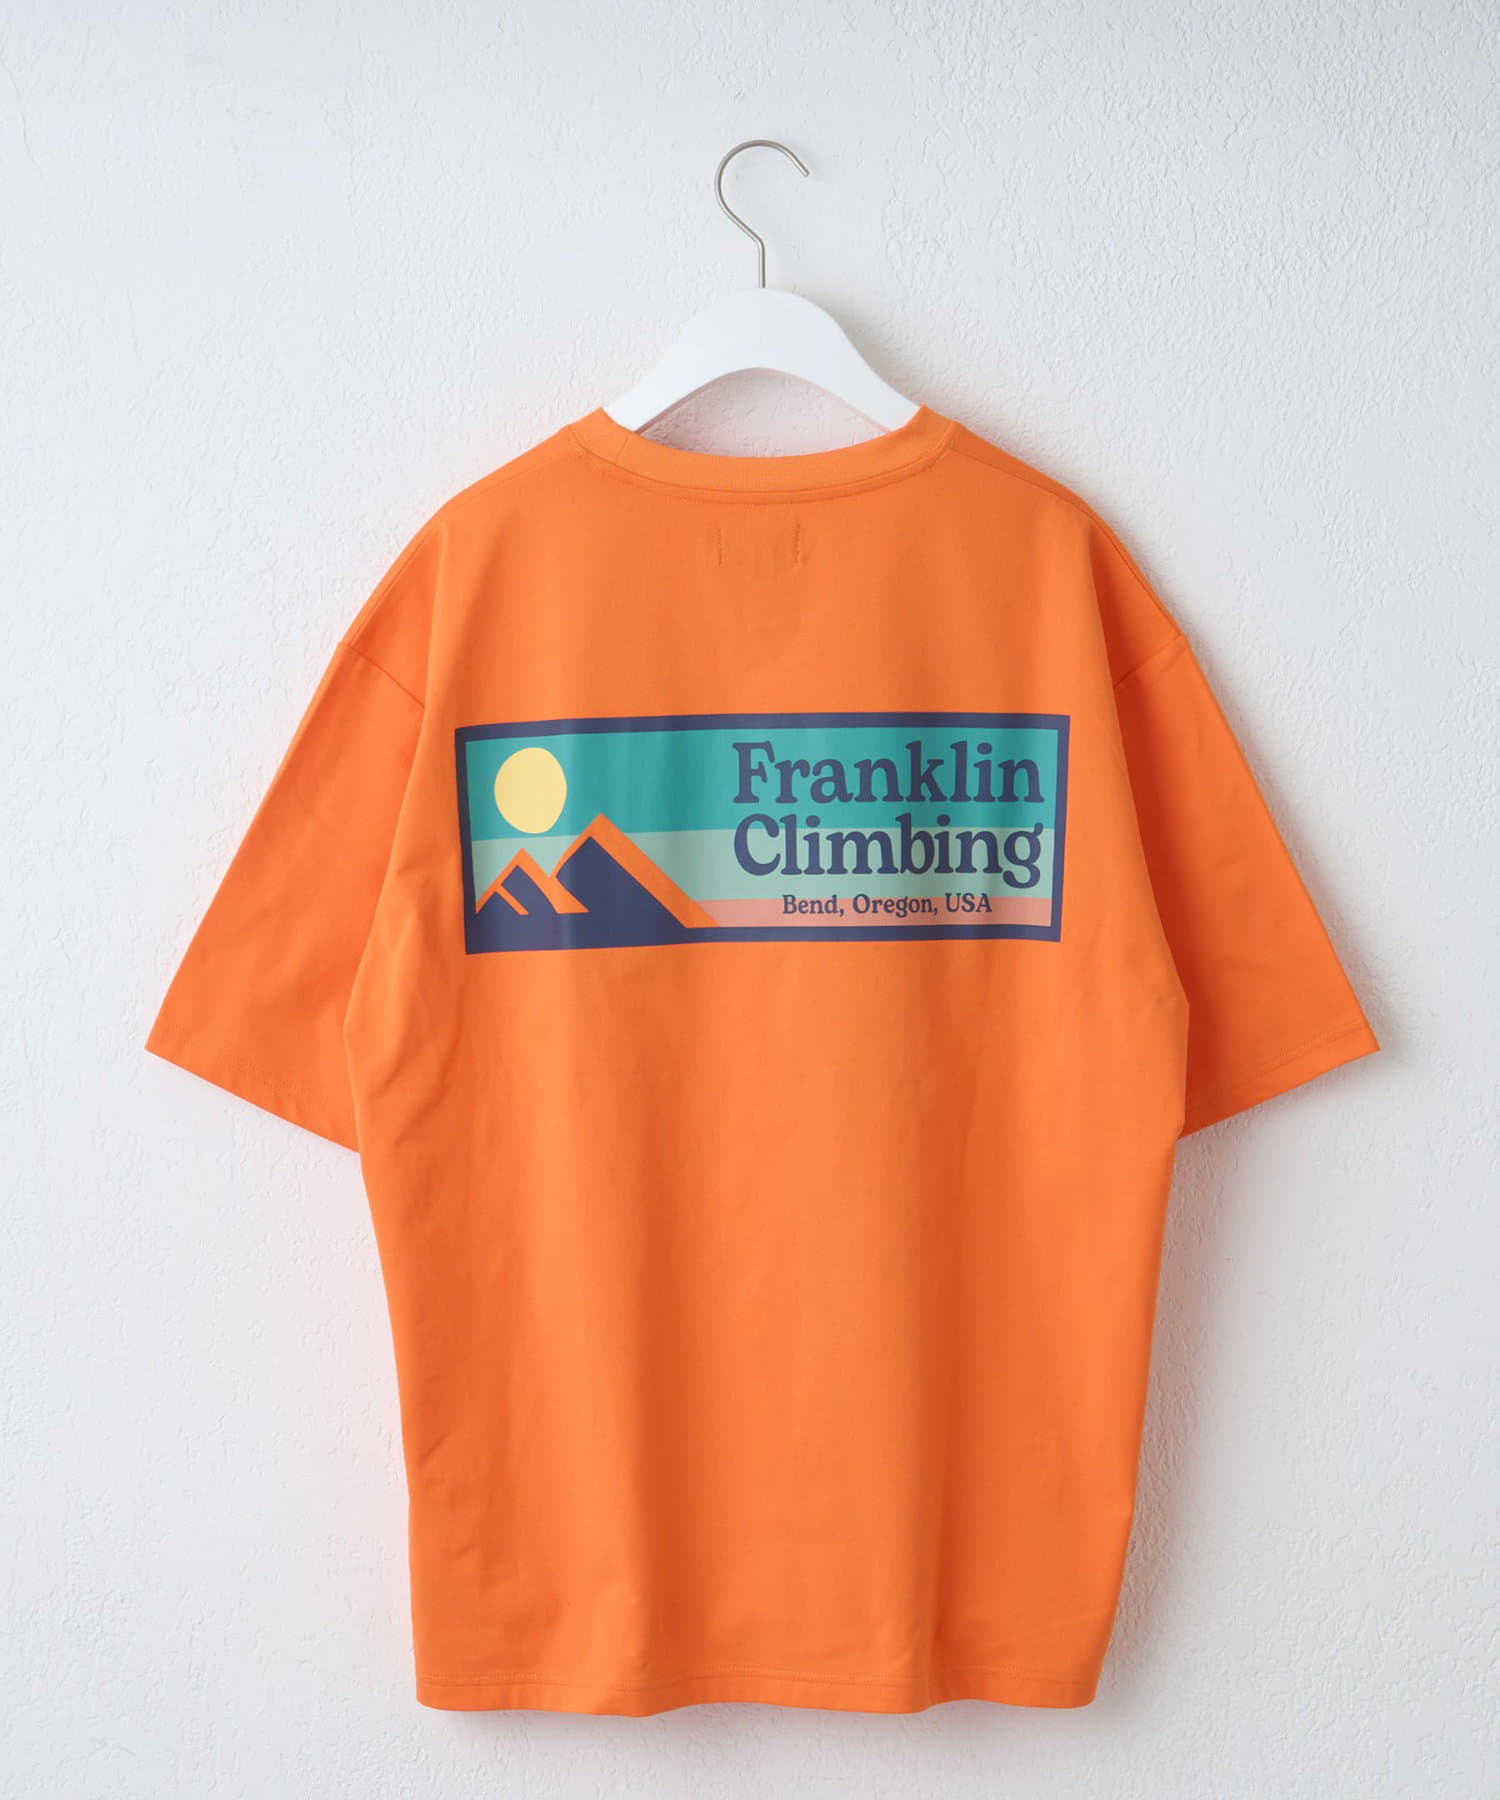 CIAOPANIC TYPY(チャオパニックティピー) 【Franklin Climbing】バックロゴ半袖Tee